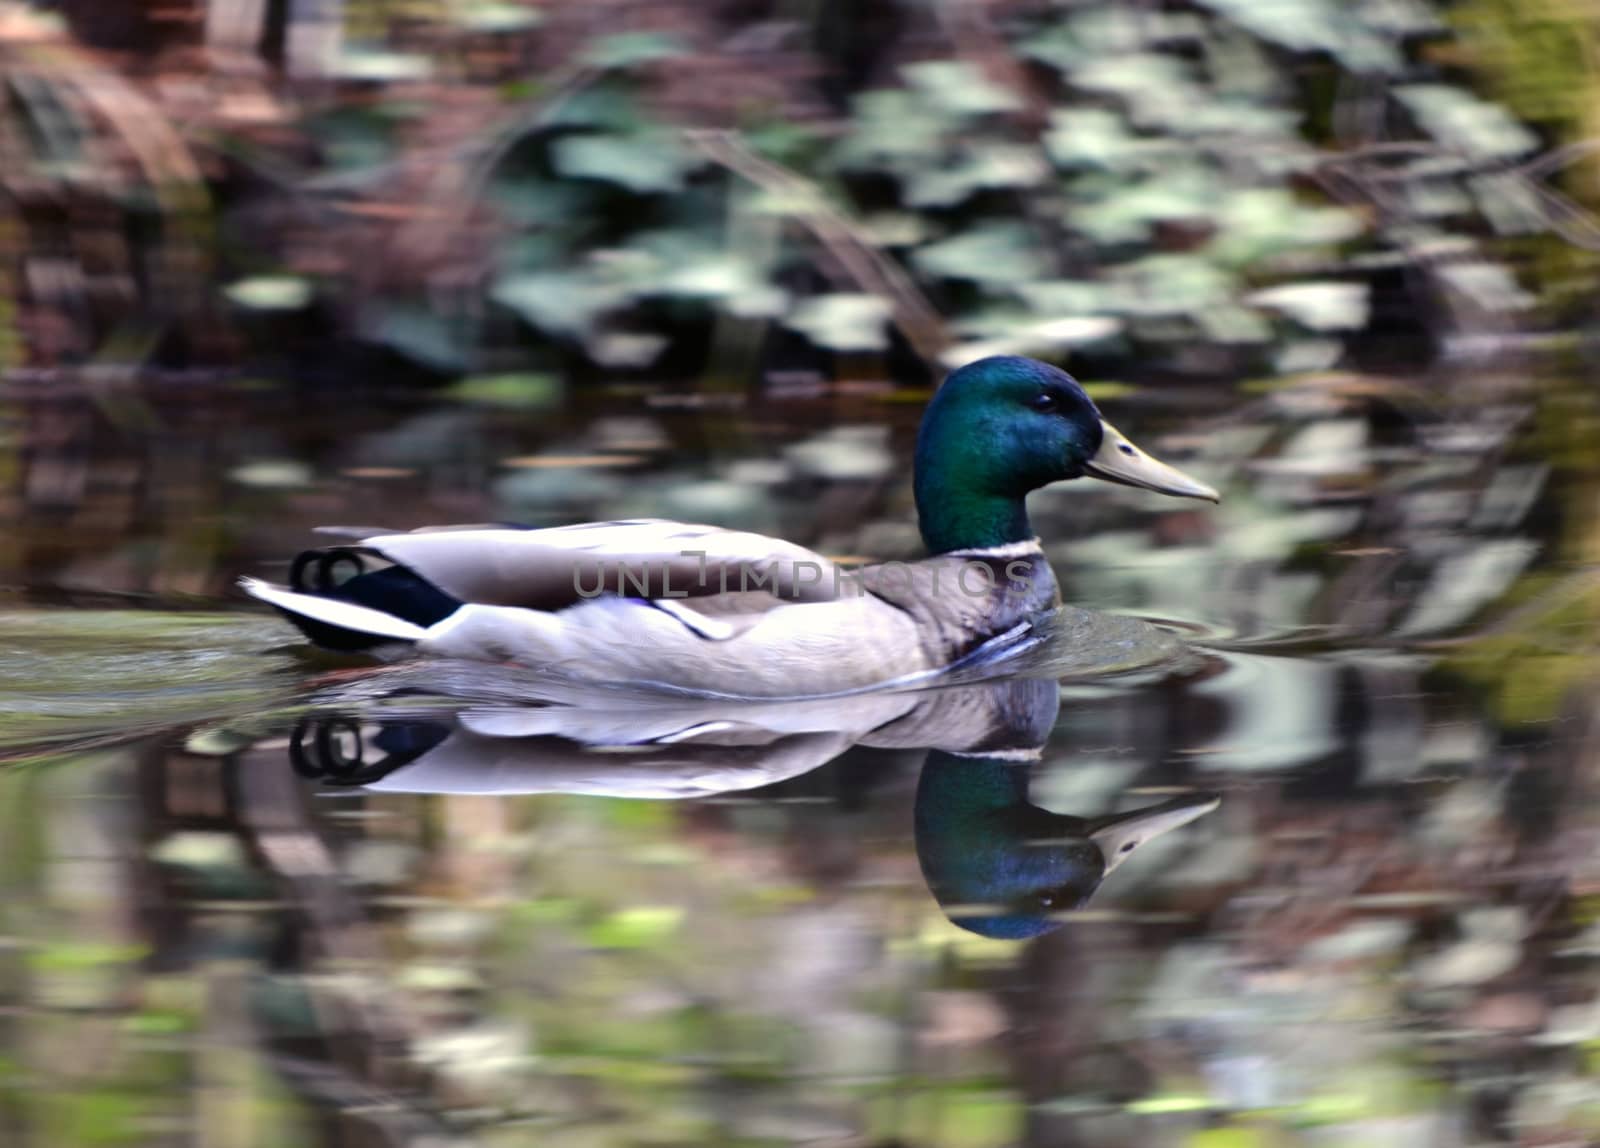 Male wild duck by hibrida13